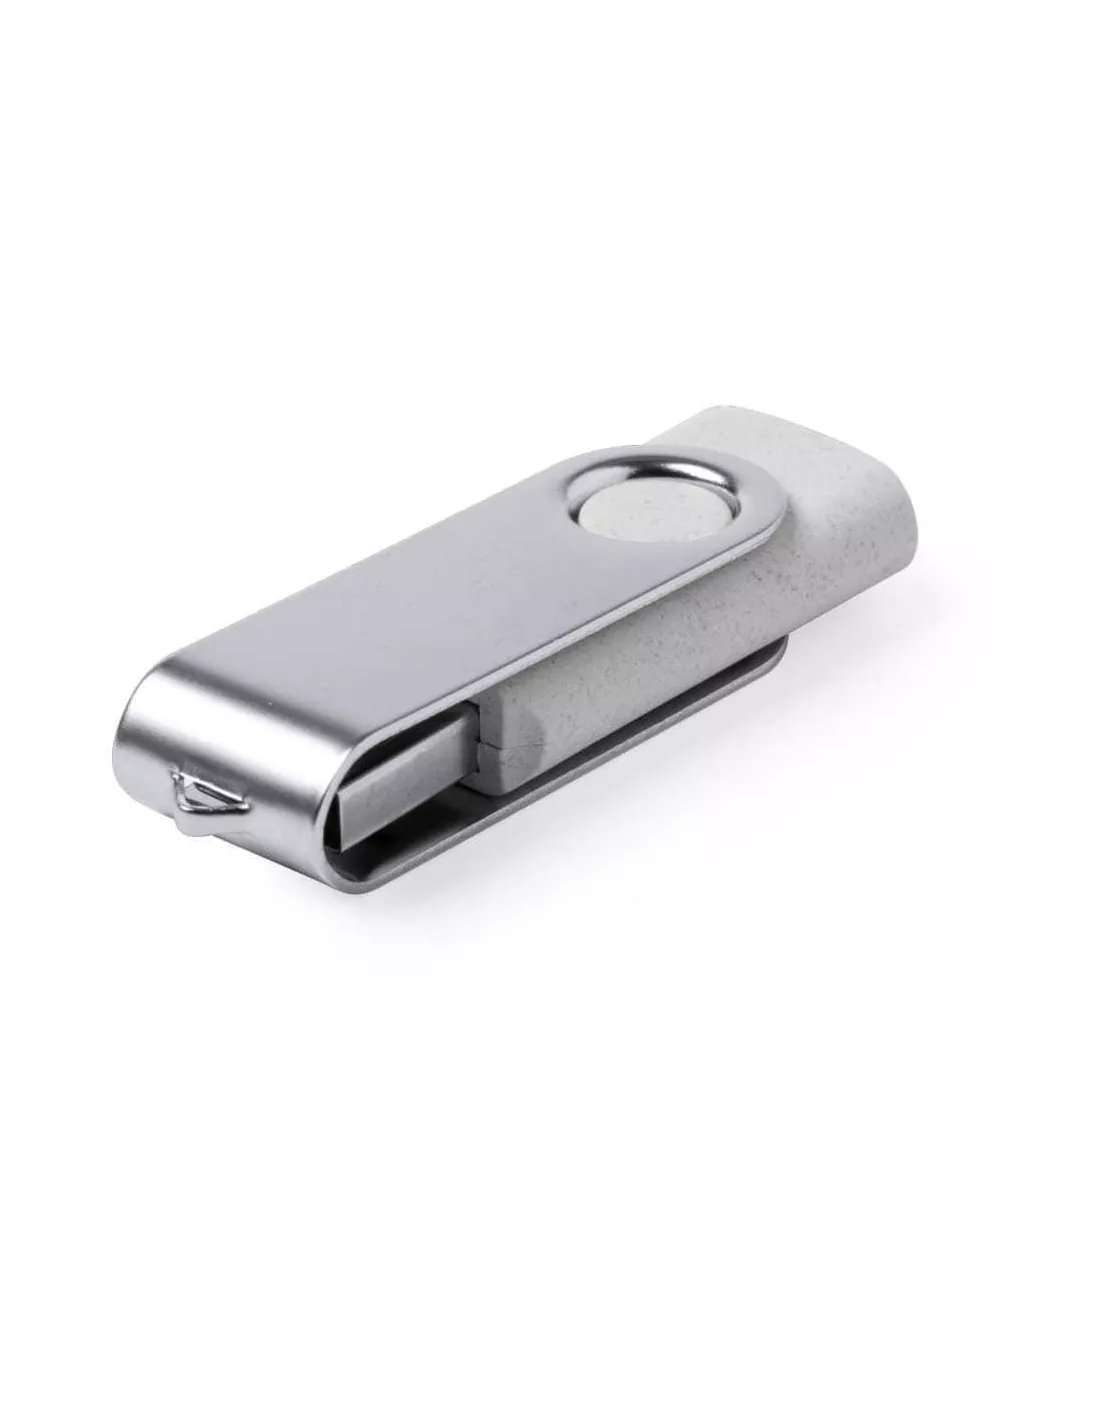 Pendrive ecológico (Memoria USB) 16GB nature con clip de metal giratorio y cuerpo de caña de trigo (memoria externa)